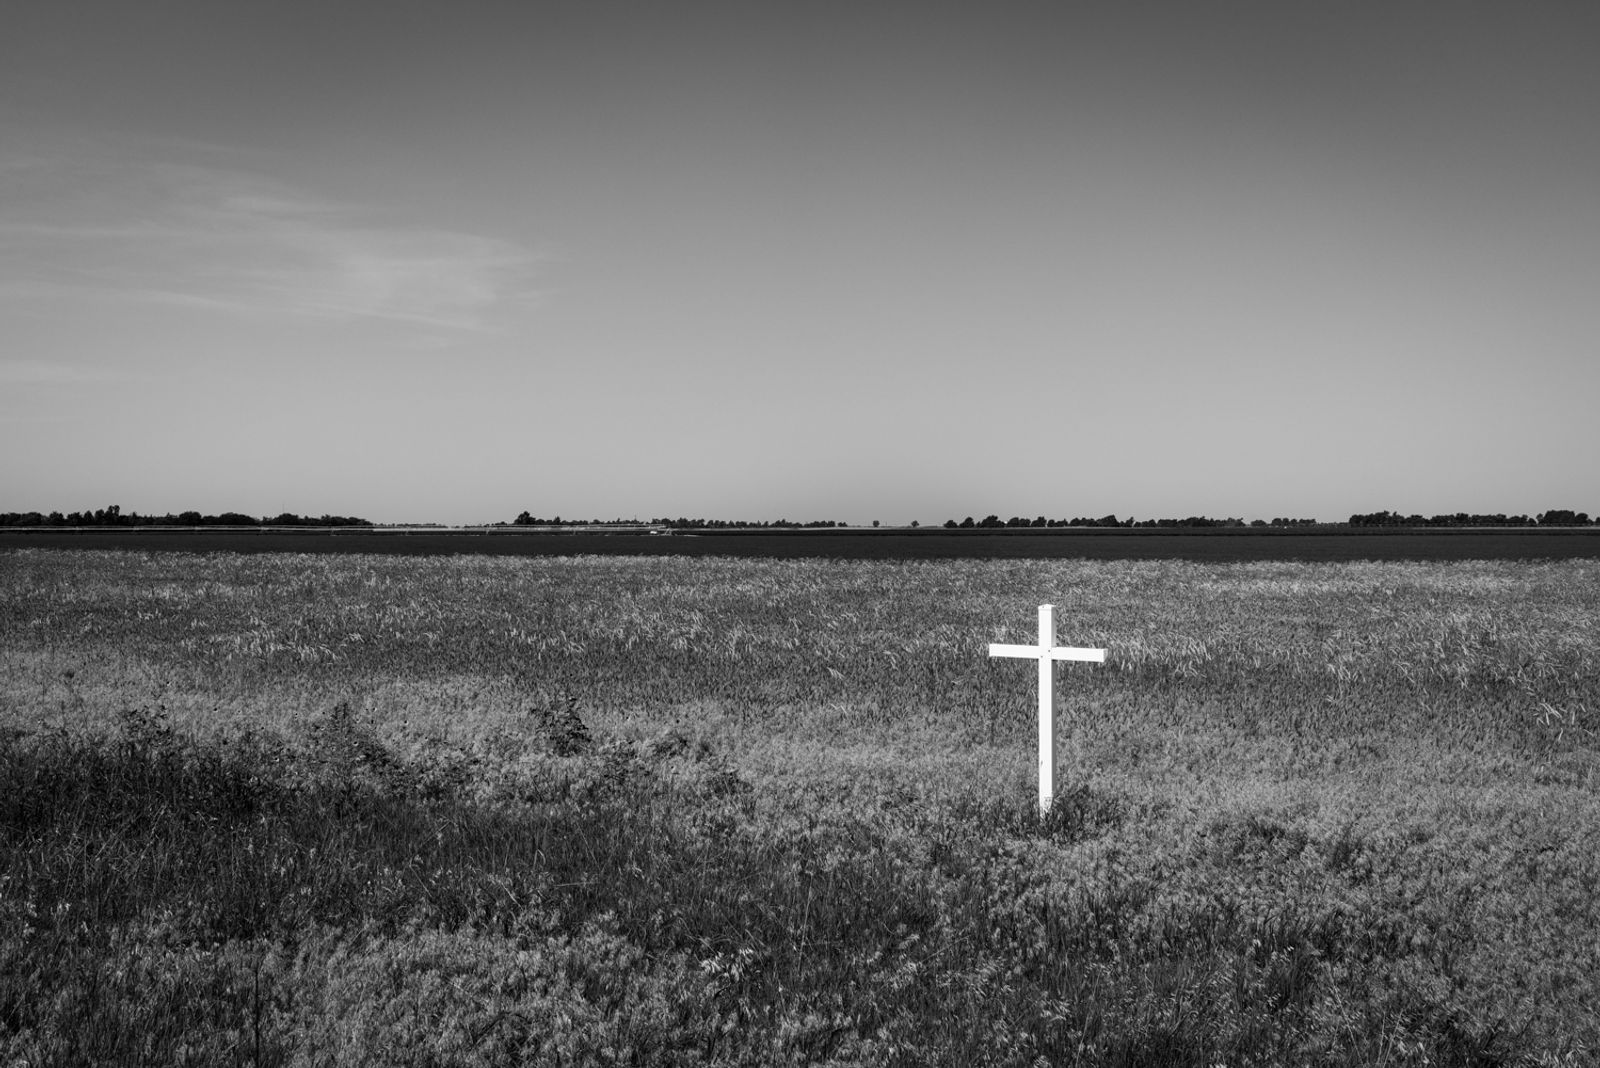 © Richard Sharum - Roadside Cross. Outside of Belpre, Kansas. 06.18.2021